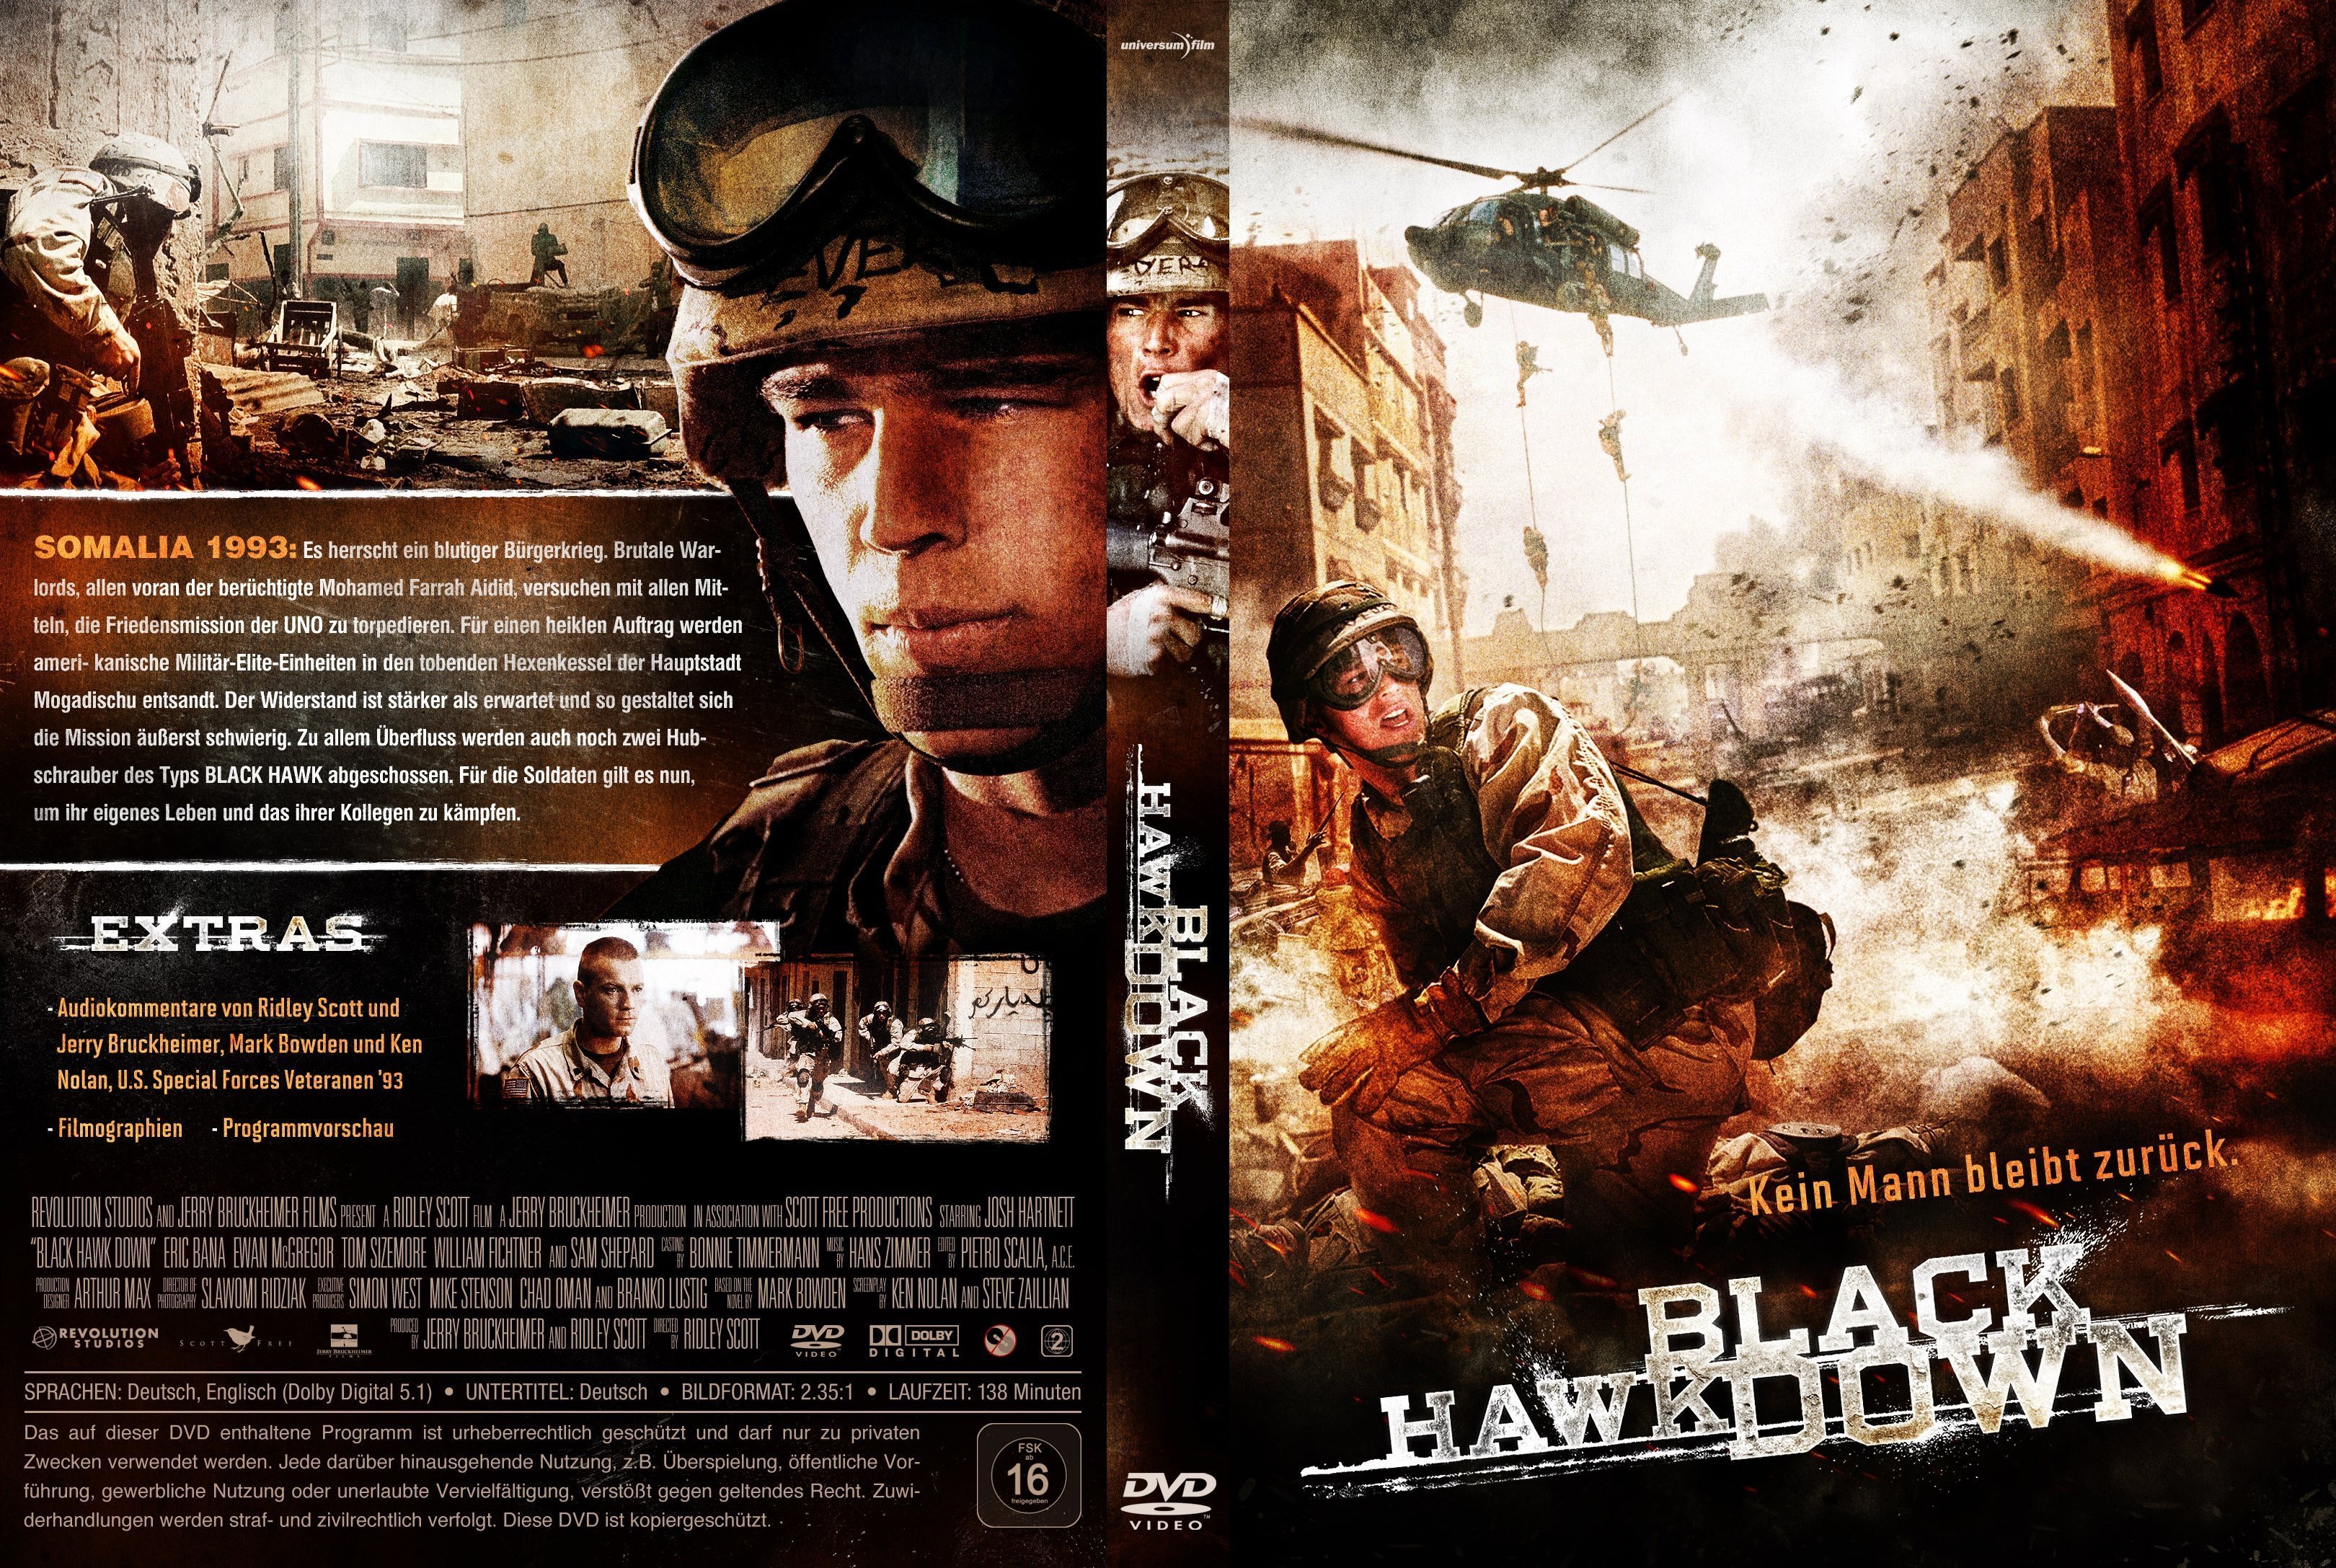 Black Hawk Down 2 Disc Set 2002 DVD: Amazoncouk